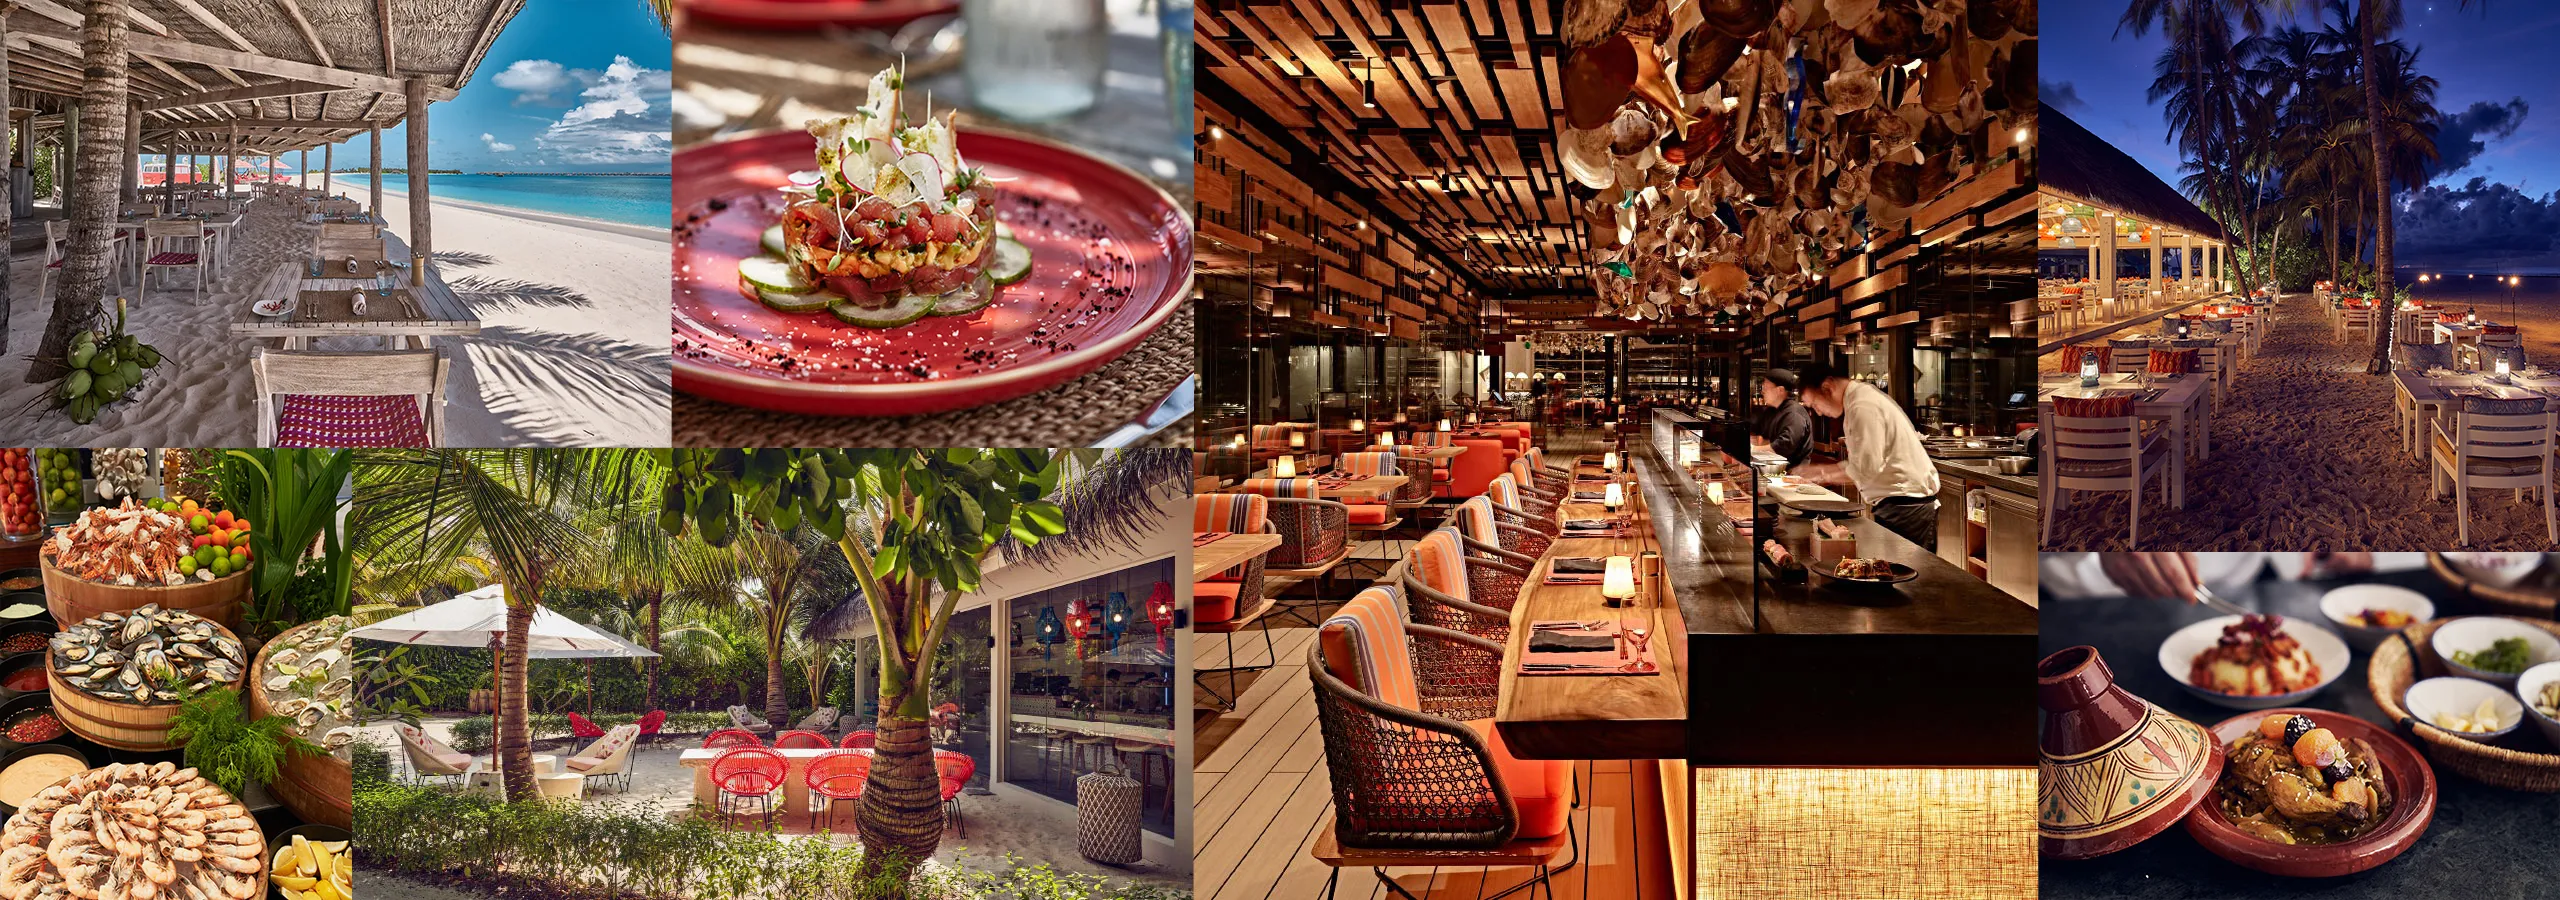 luxury-resort-maldives-seaside-collection-restaurant-collage